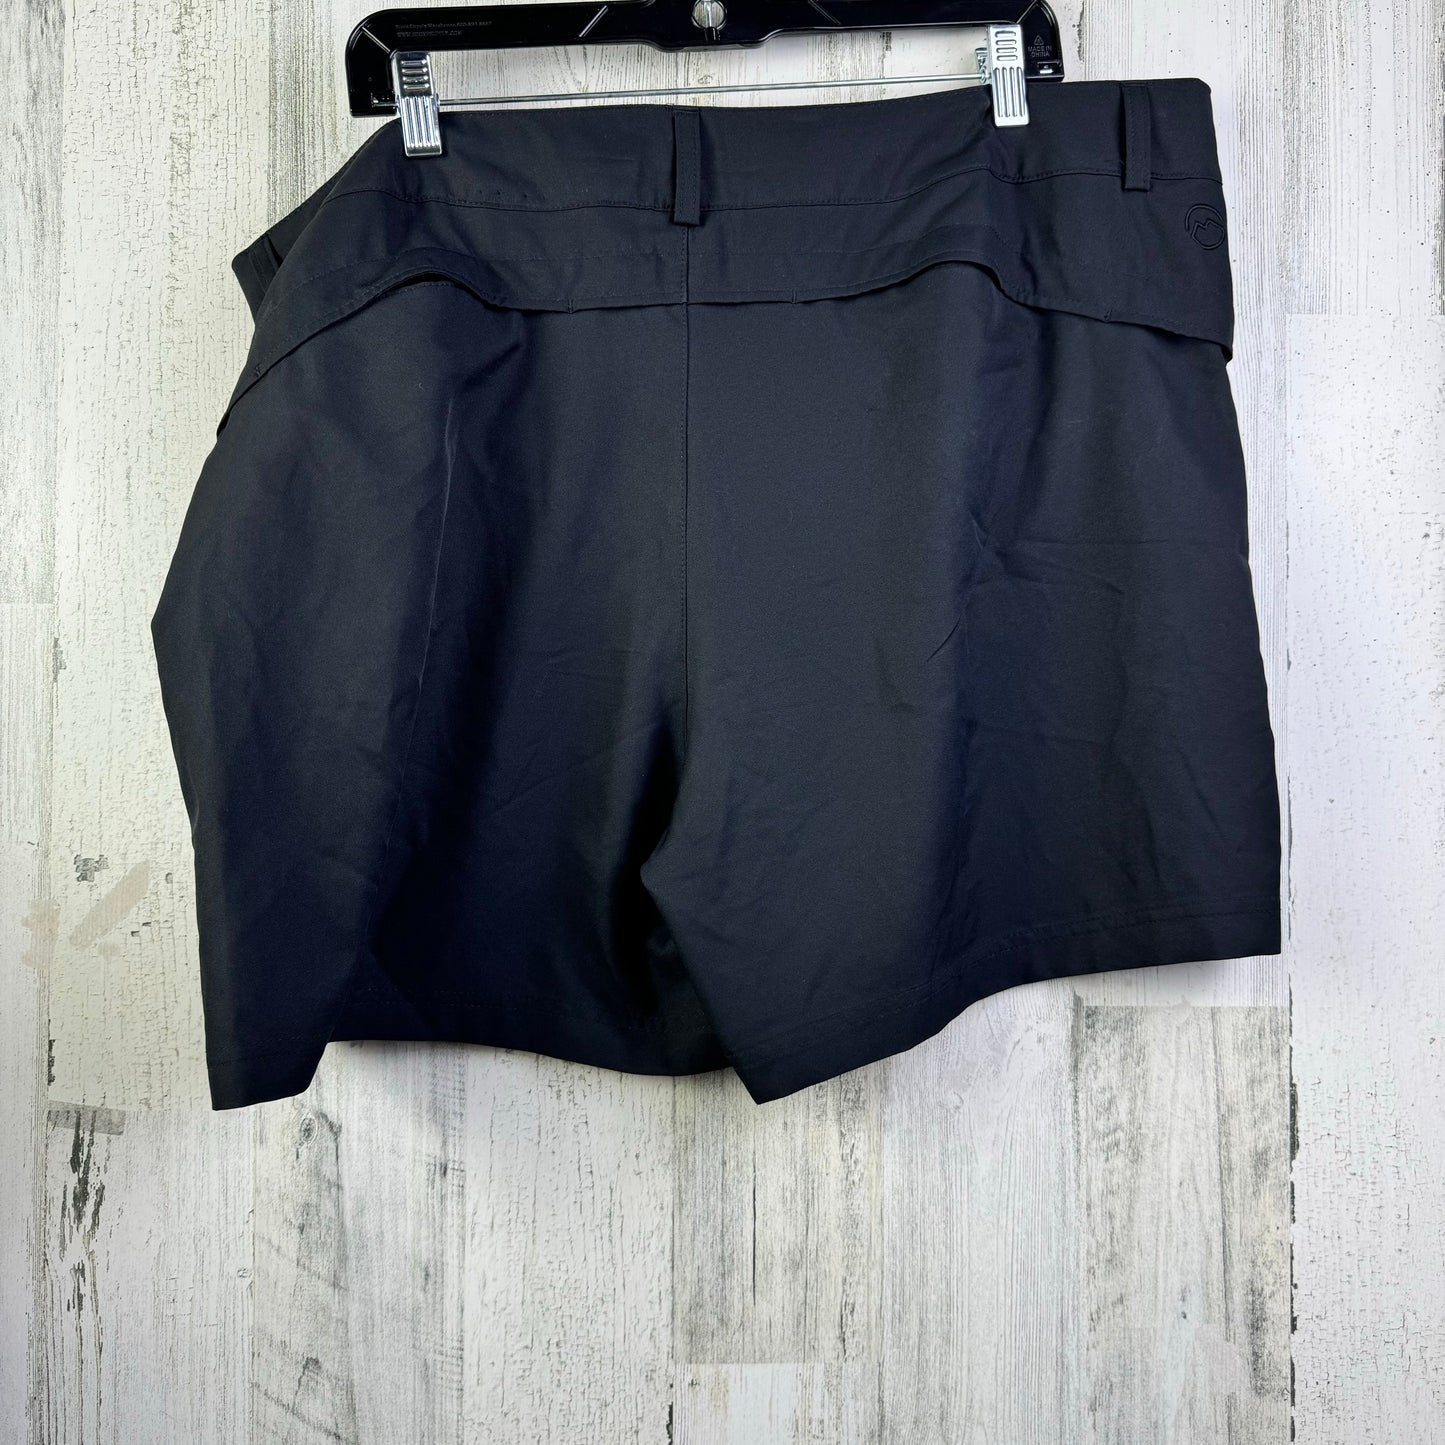 Black Athletic Shorts Magellan, Size 1x